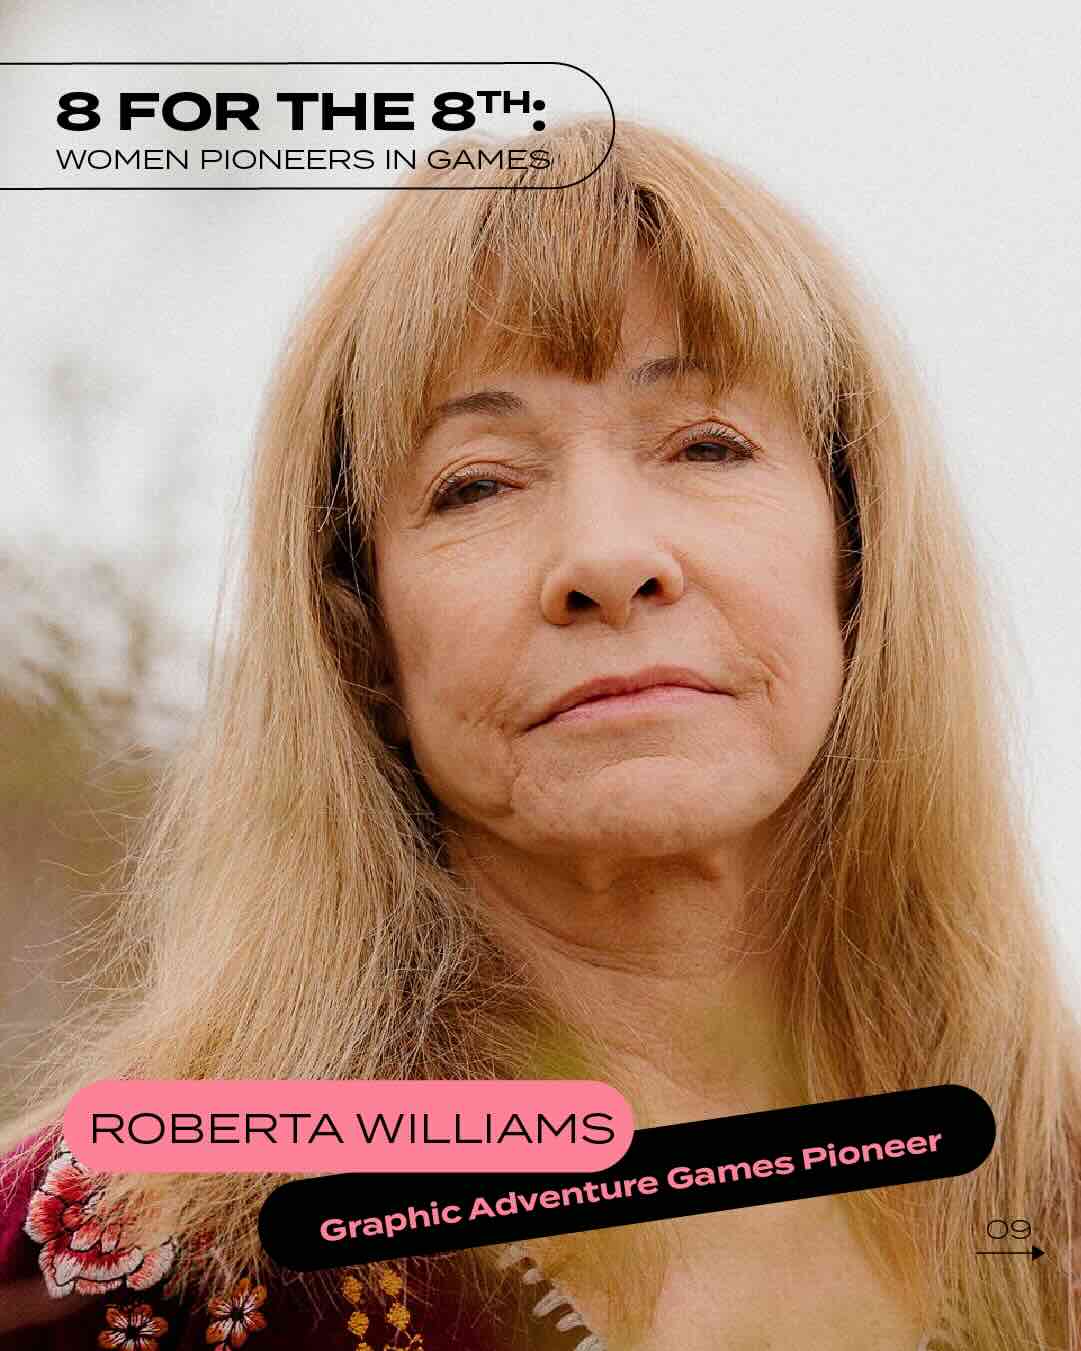 Roberta Williams, Graphic Adventure Games Pioneer